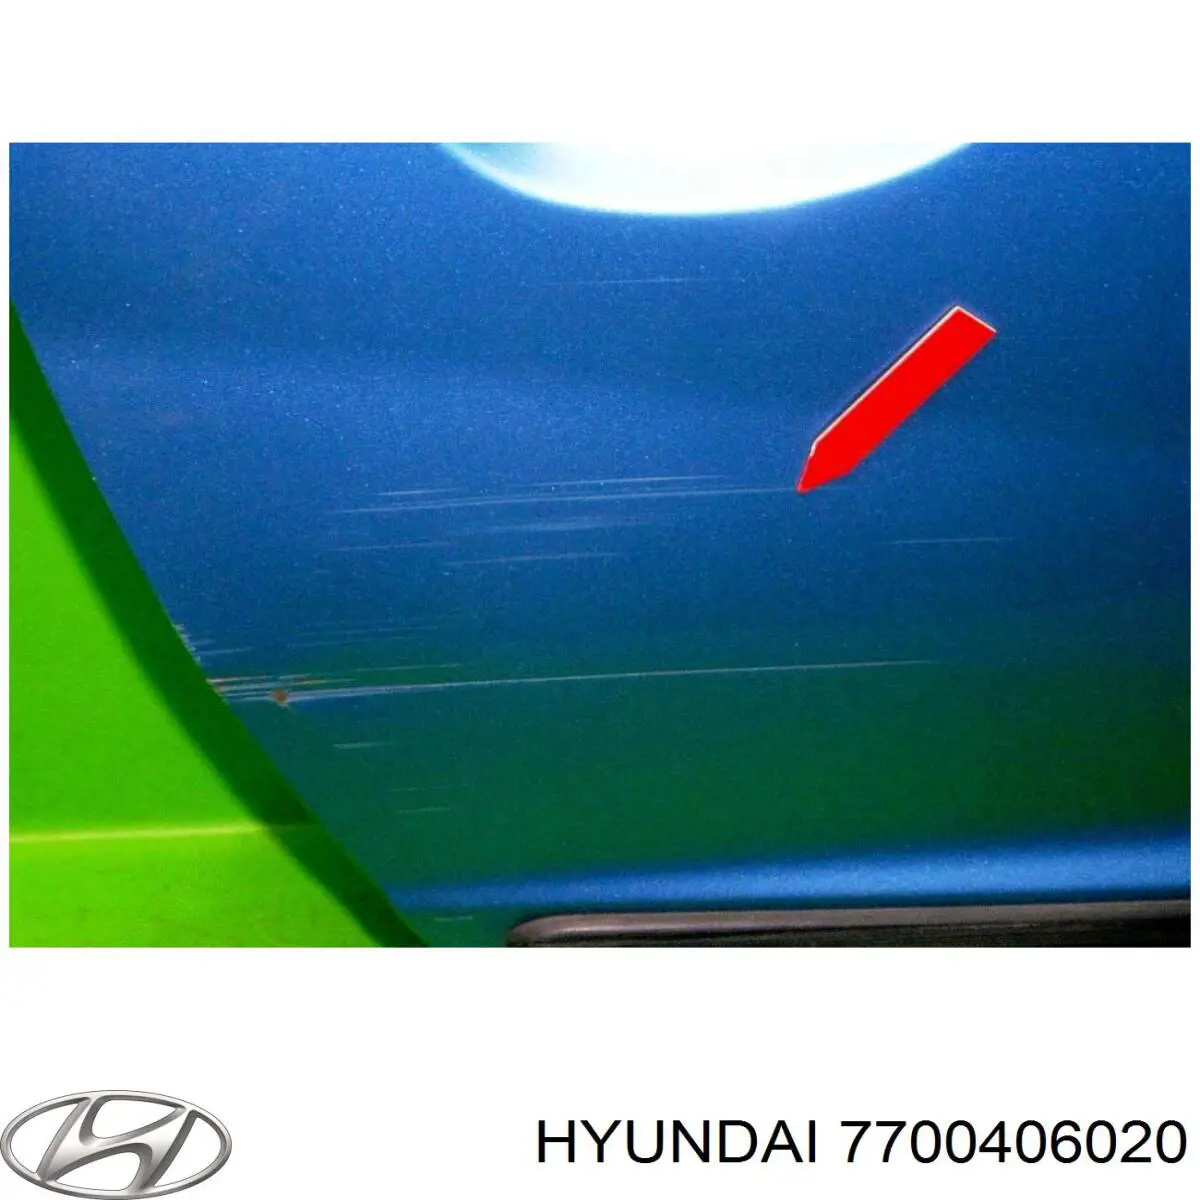 7700406020 Hyundai/Kia puerta trasera derecha